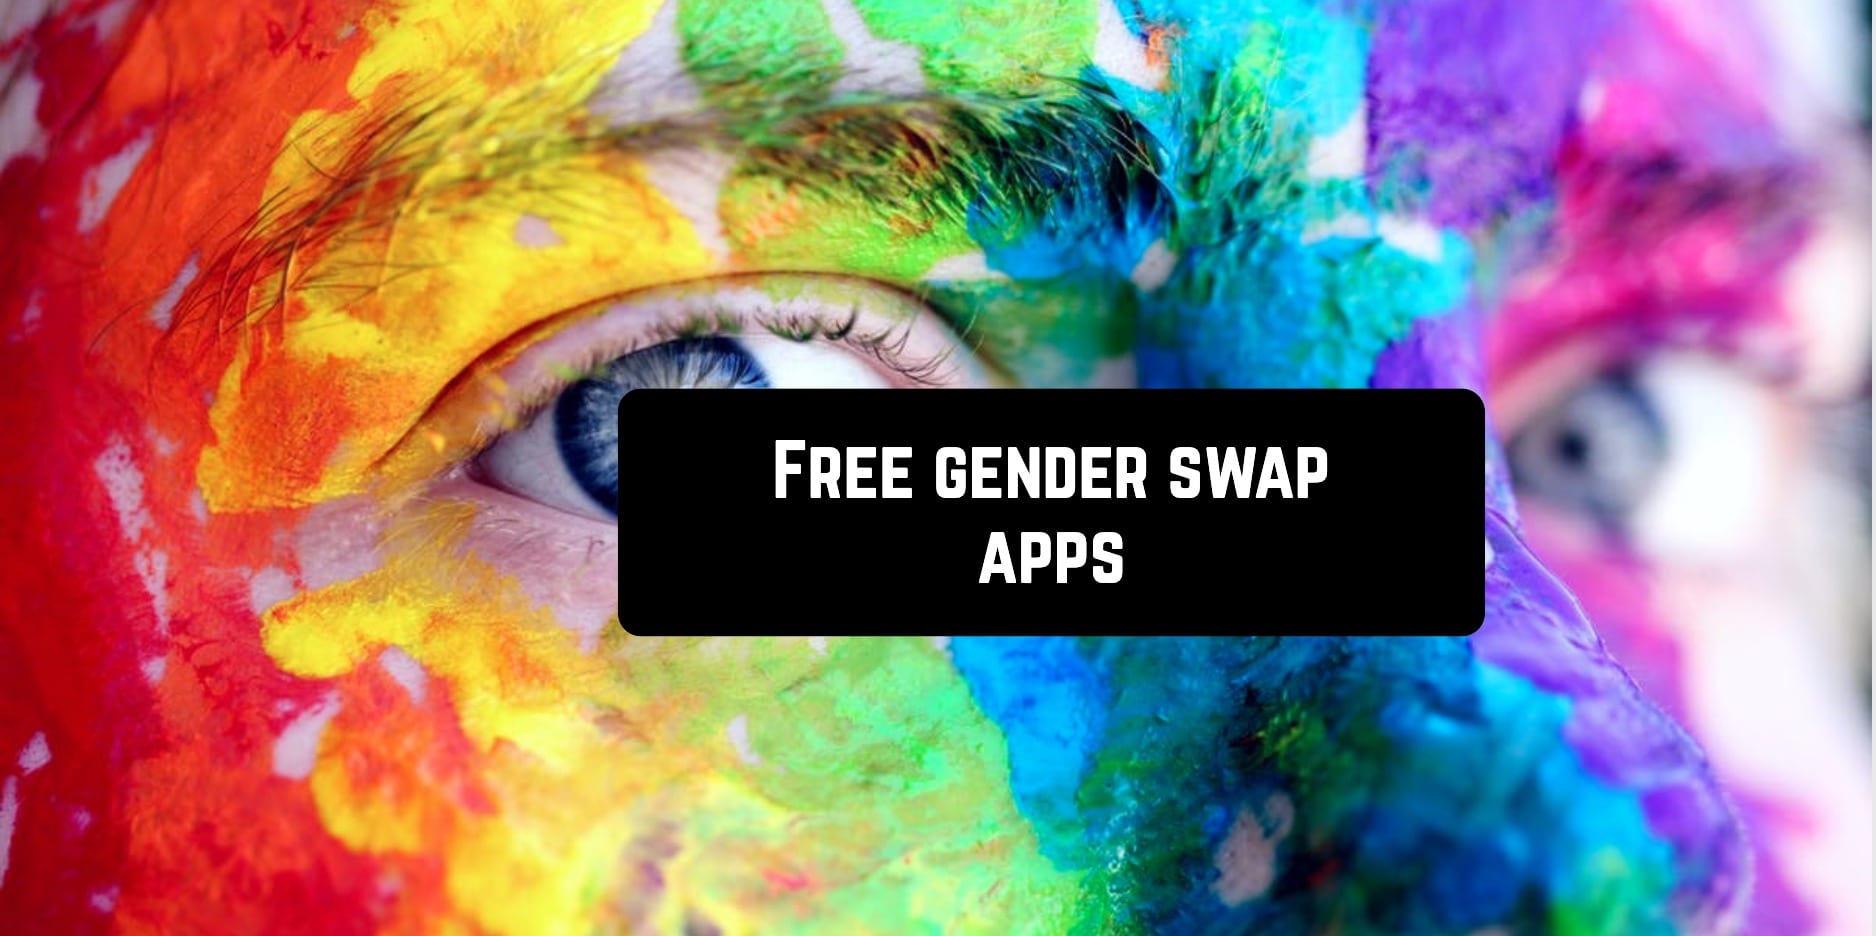 Free gender swap apps